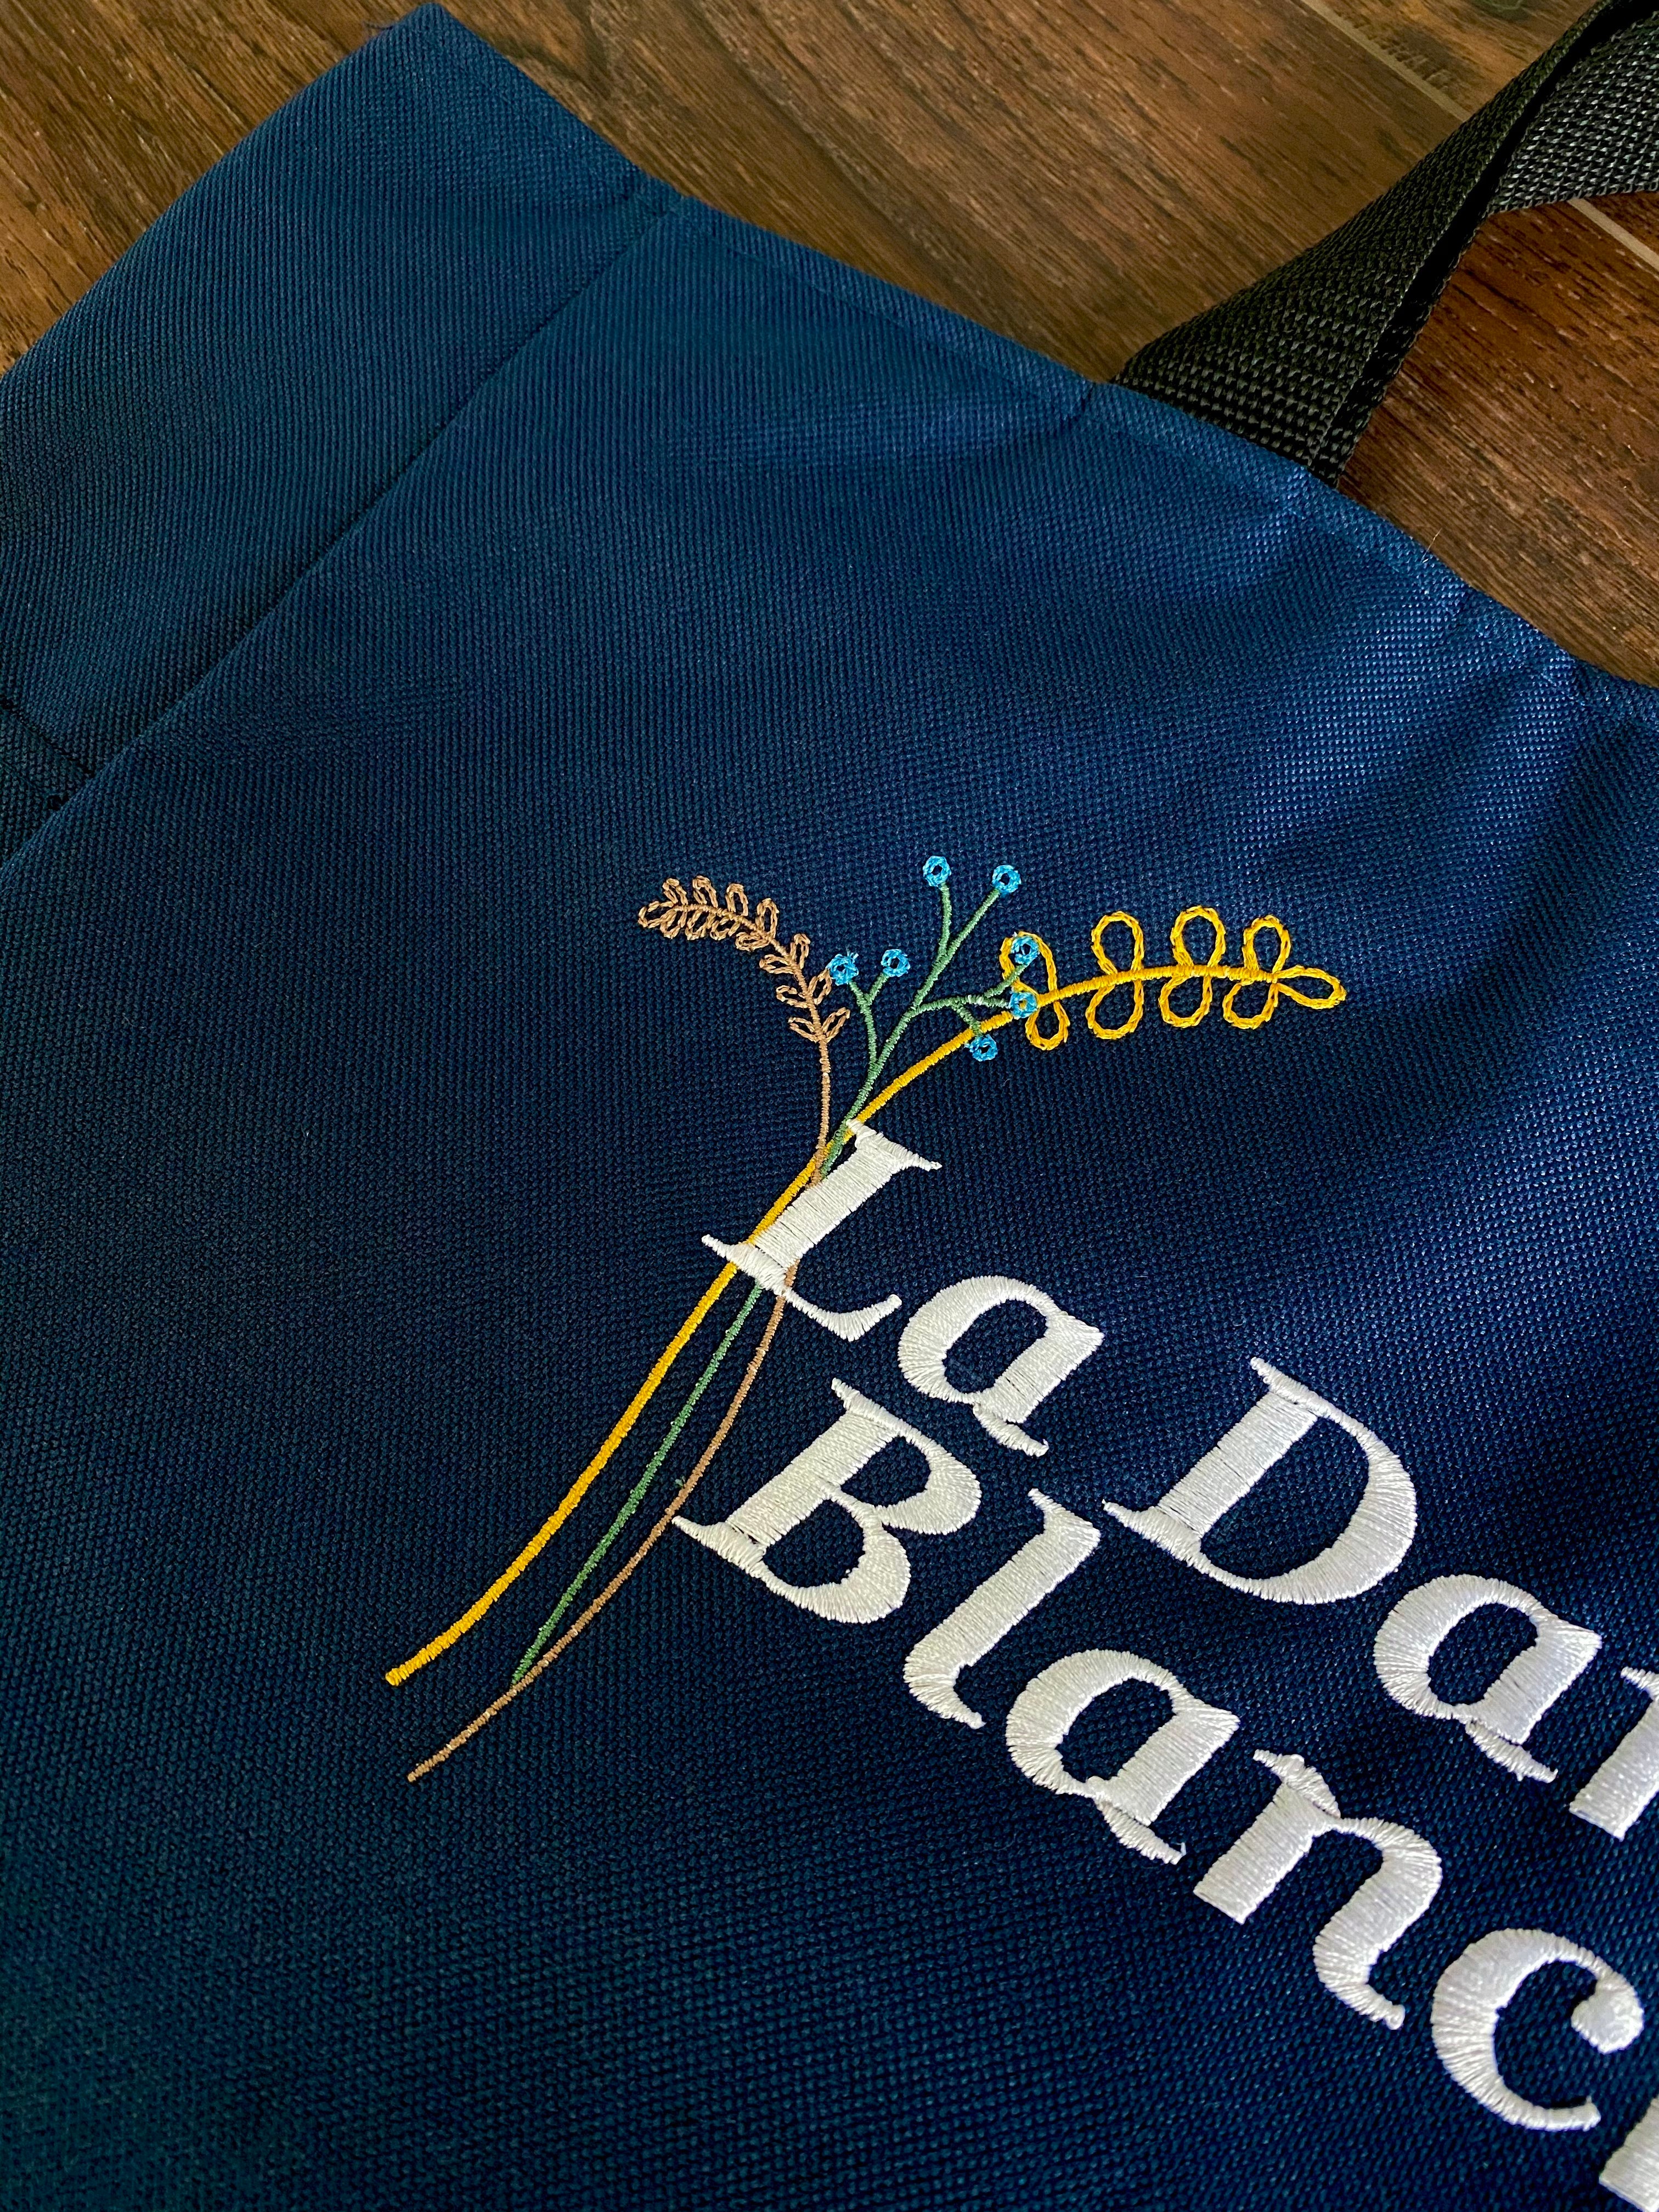 La Dame Blanche Embroidered Tote Bag - Outlander Inspiration